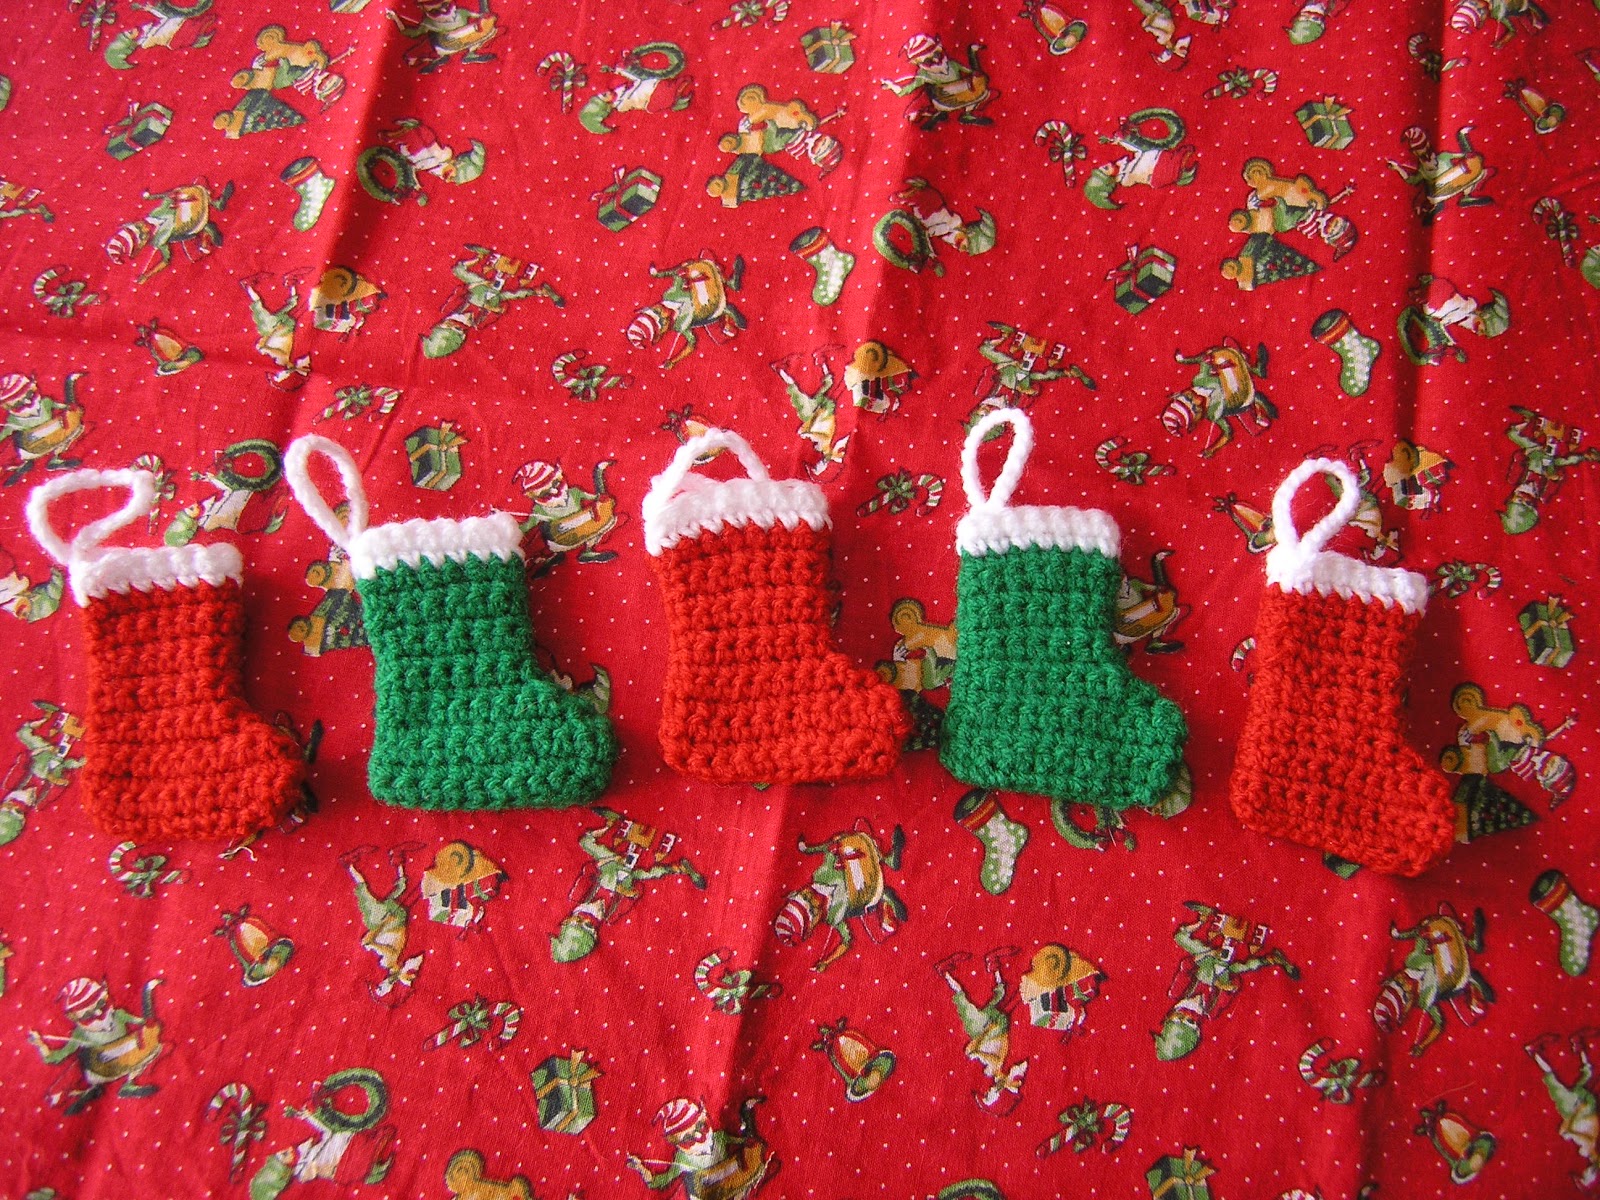 40 All Free Crochet Christmas Stocking Patterns Patterns Hub